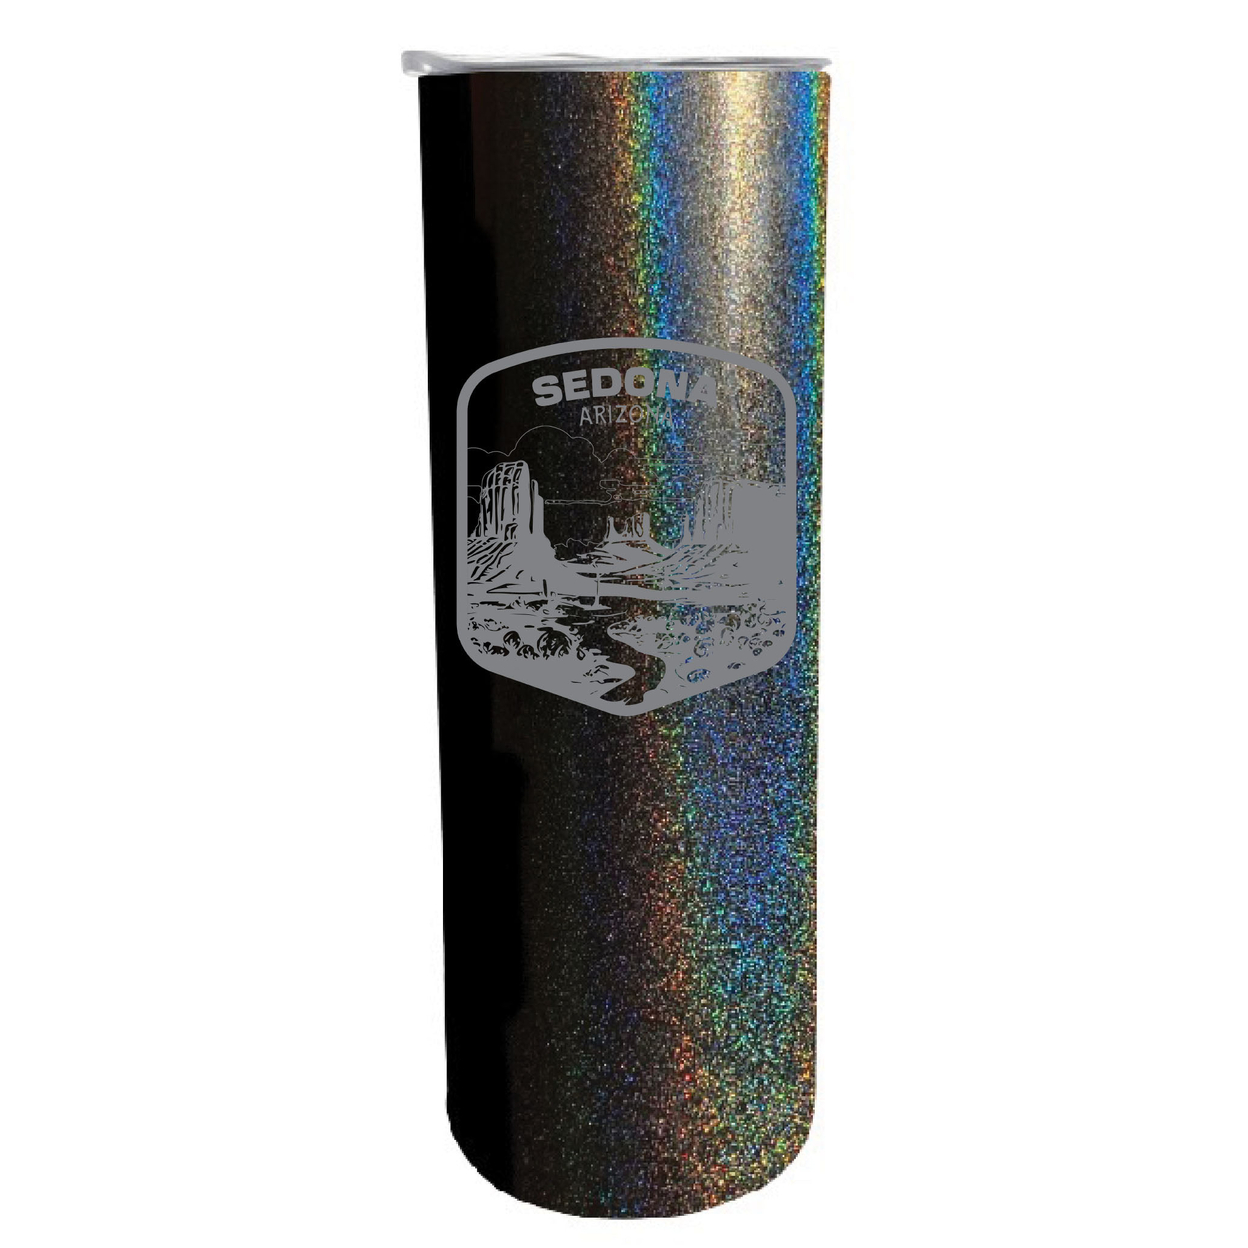 Sedona Arizona Souvenir 20 Oz Engraved Insulated Stainless Steel Skinny Tumbler - Black Glitter,,Single Unit